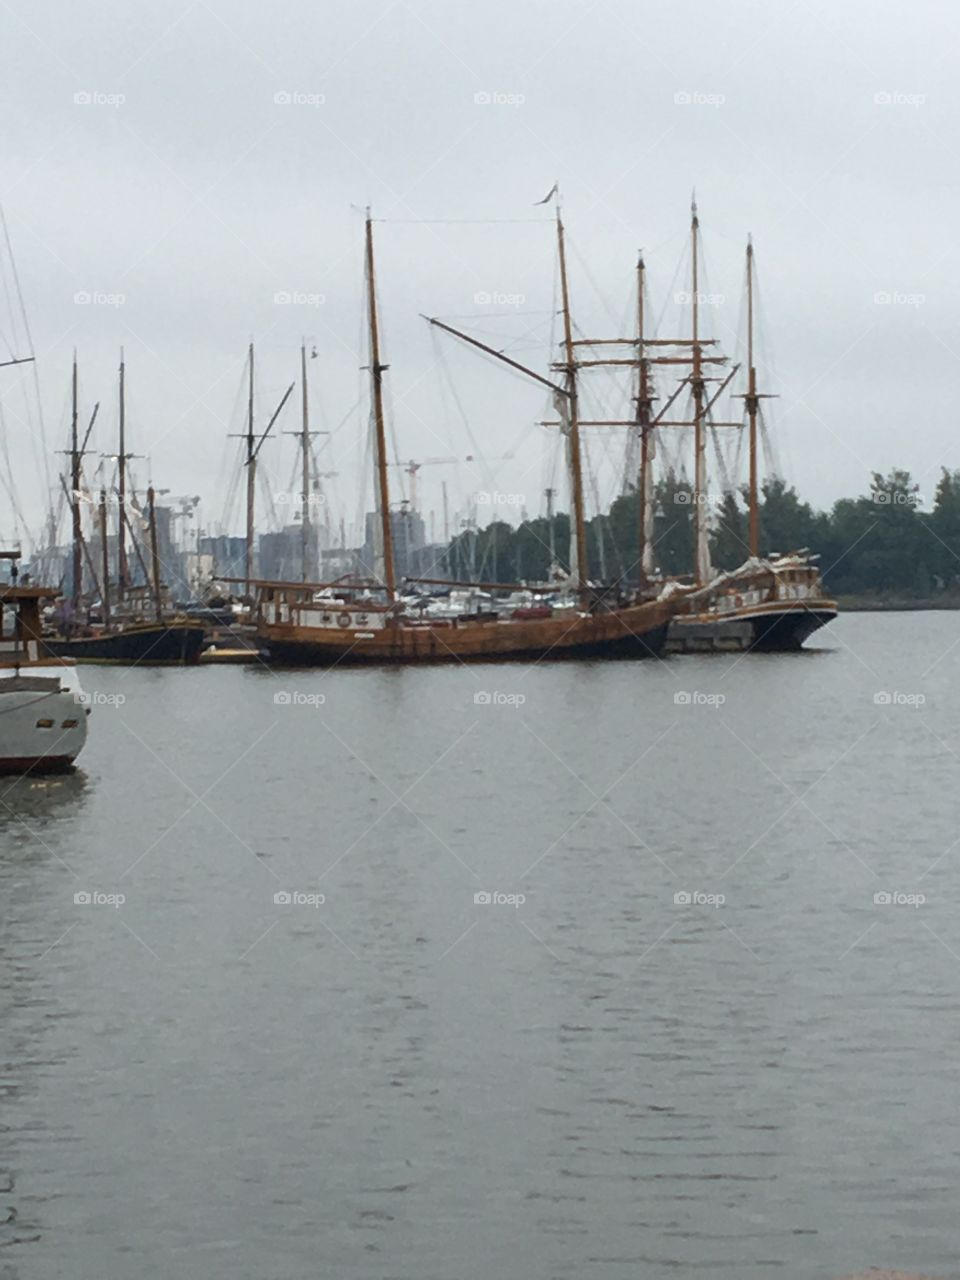 Helsinki boats 